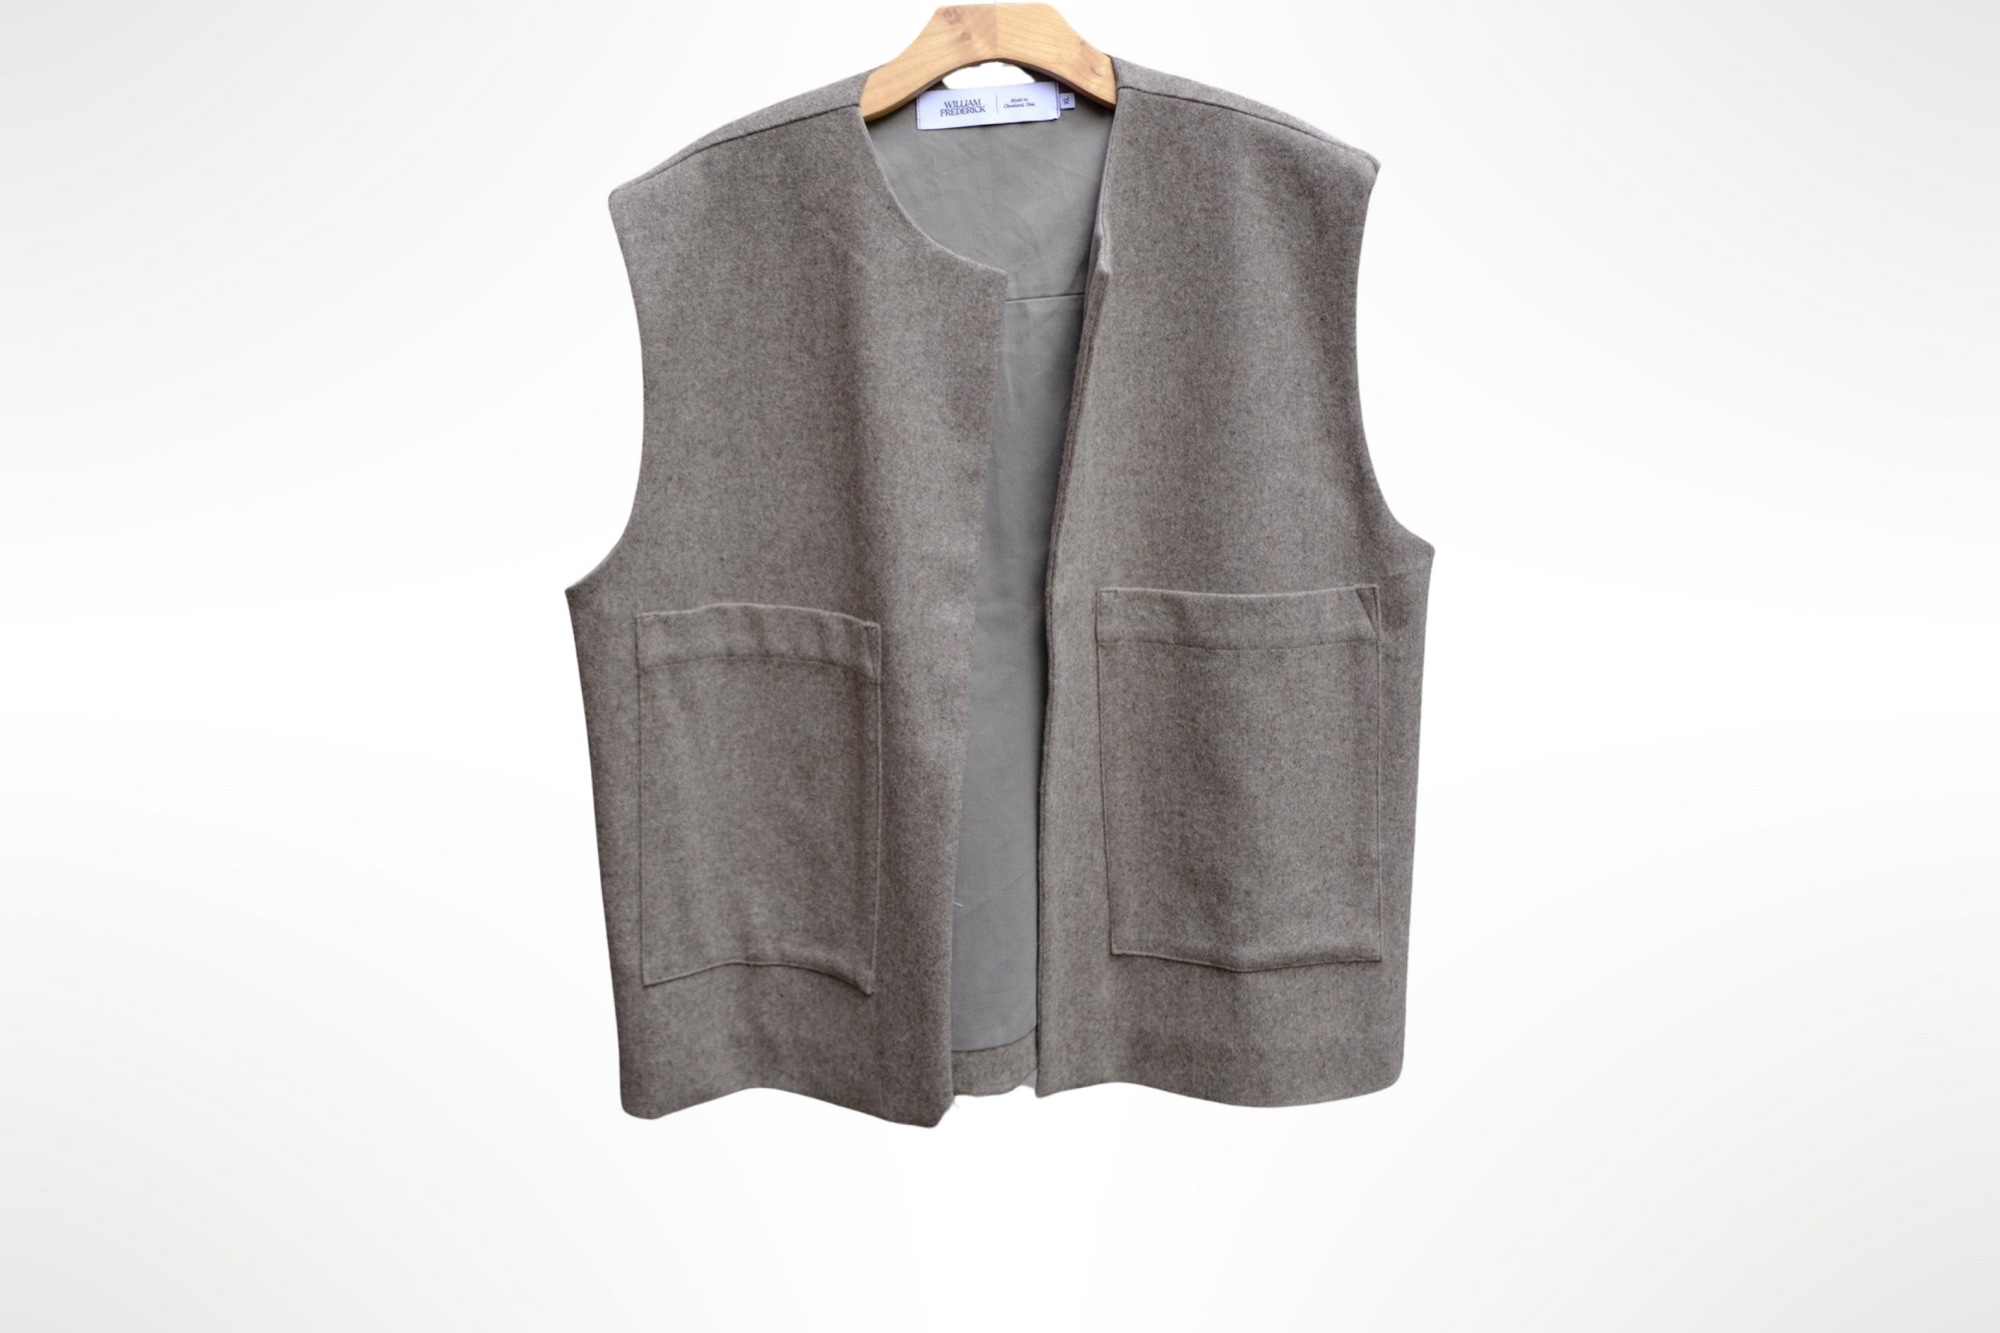 studio vest in heathered taupe wool melton